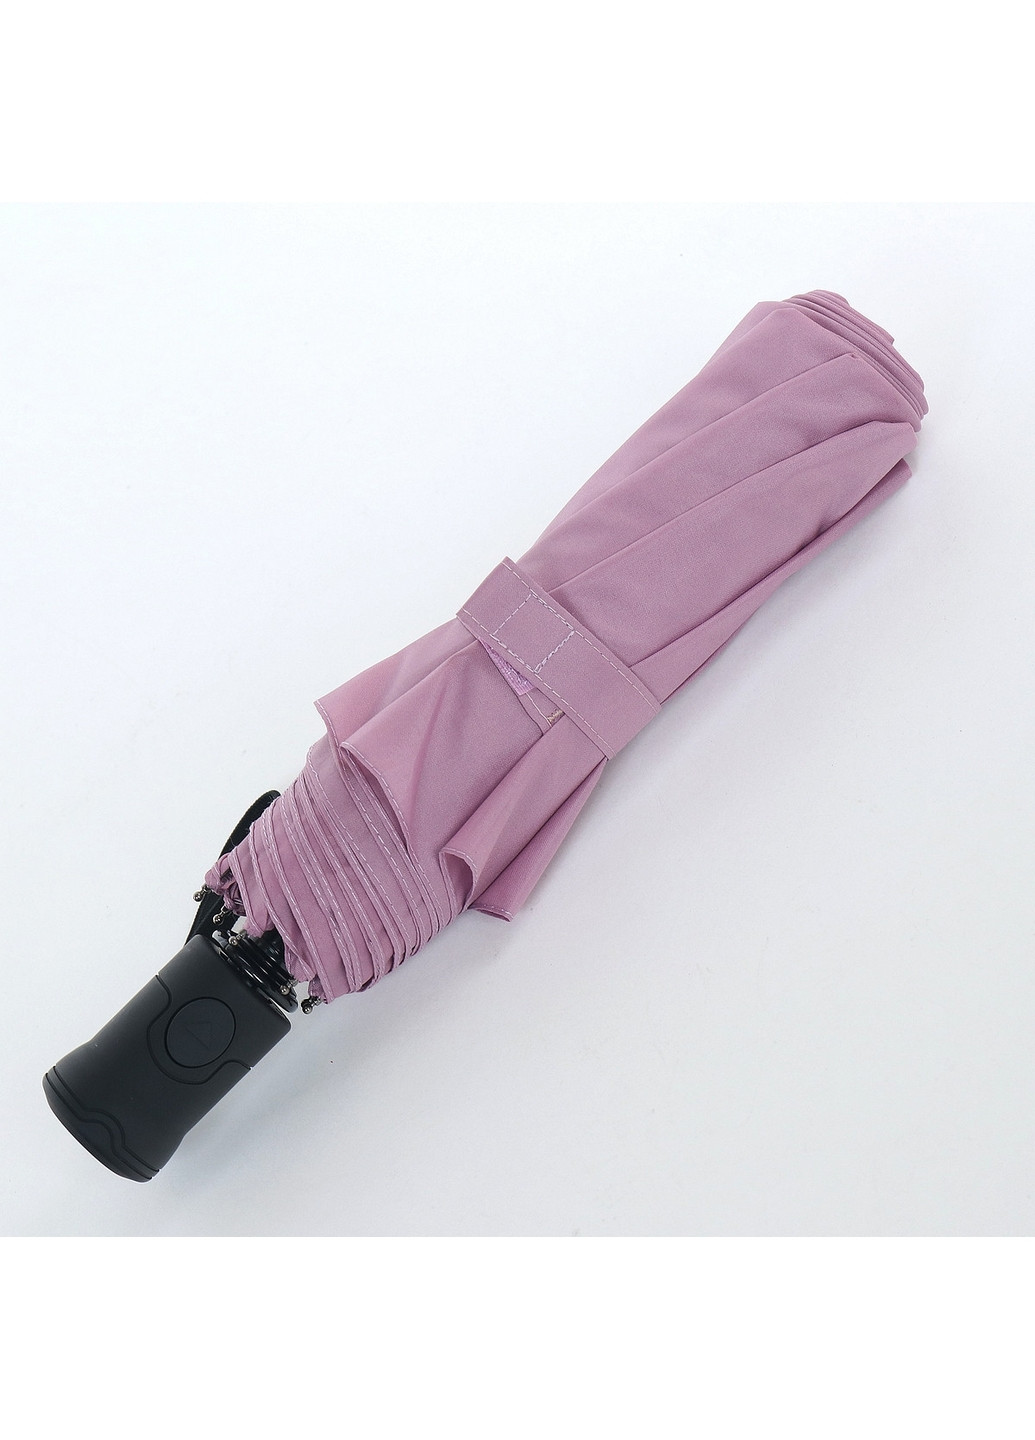 Жіноча складна парасоля напівавтомат 98 см ArtRain (260330183)